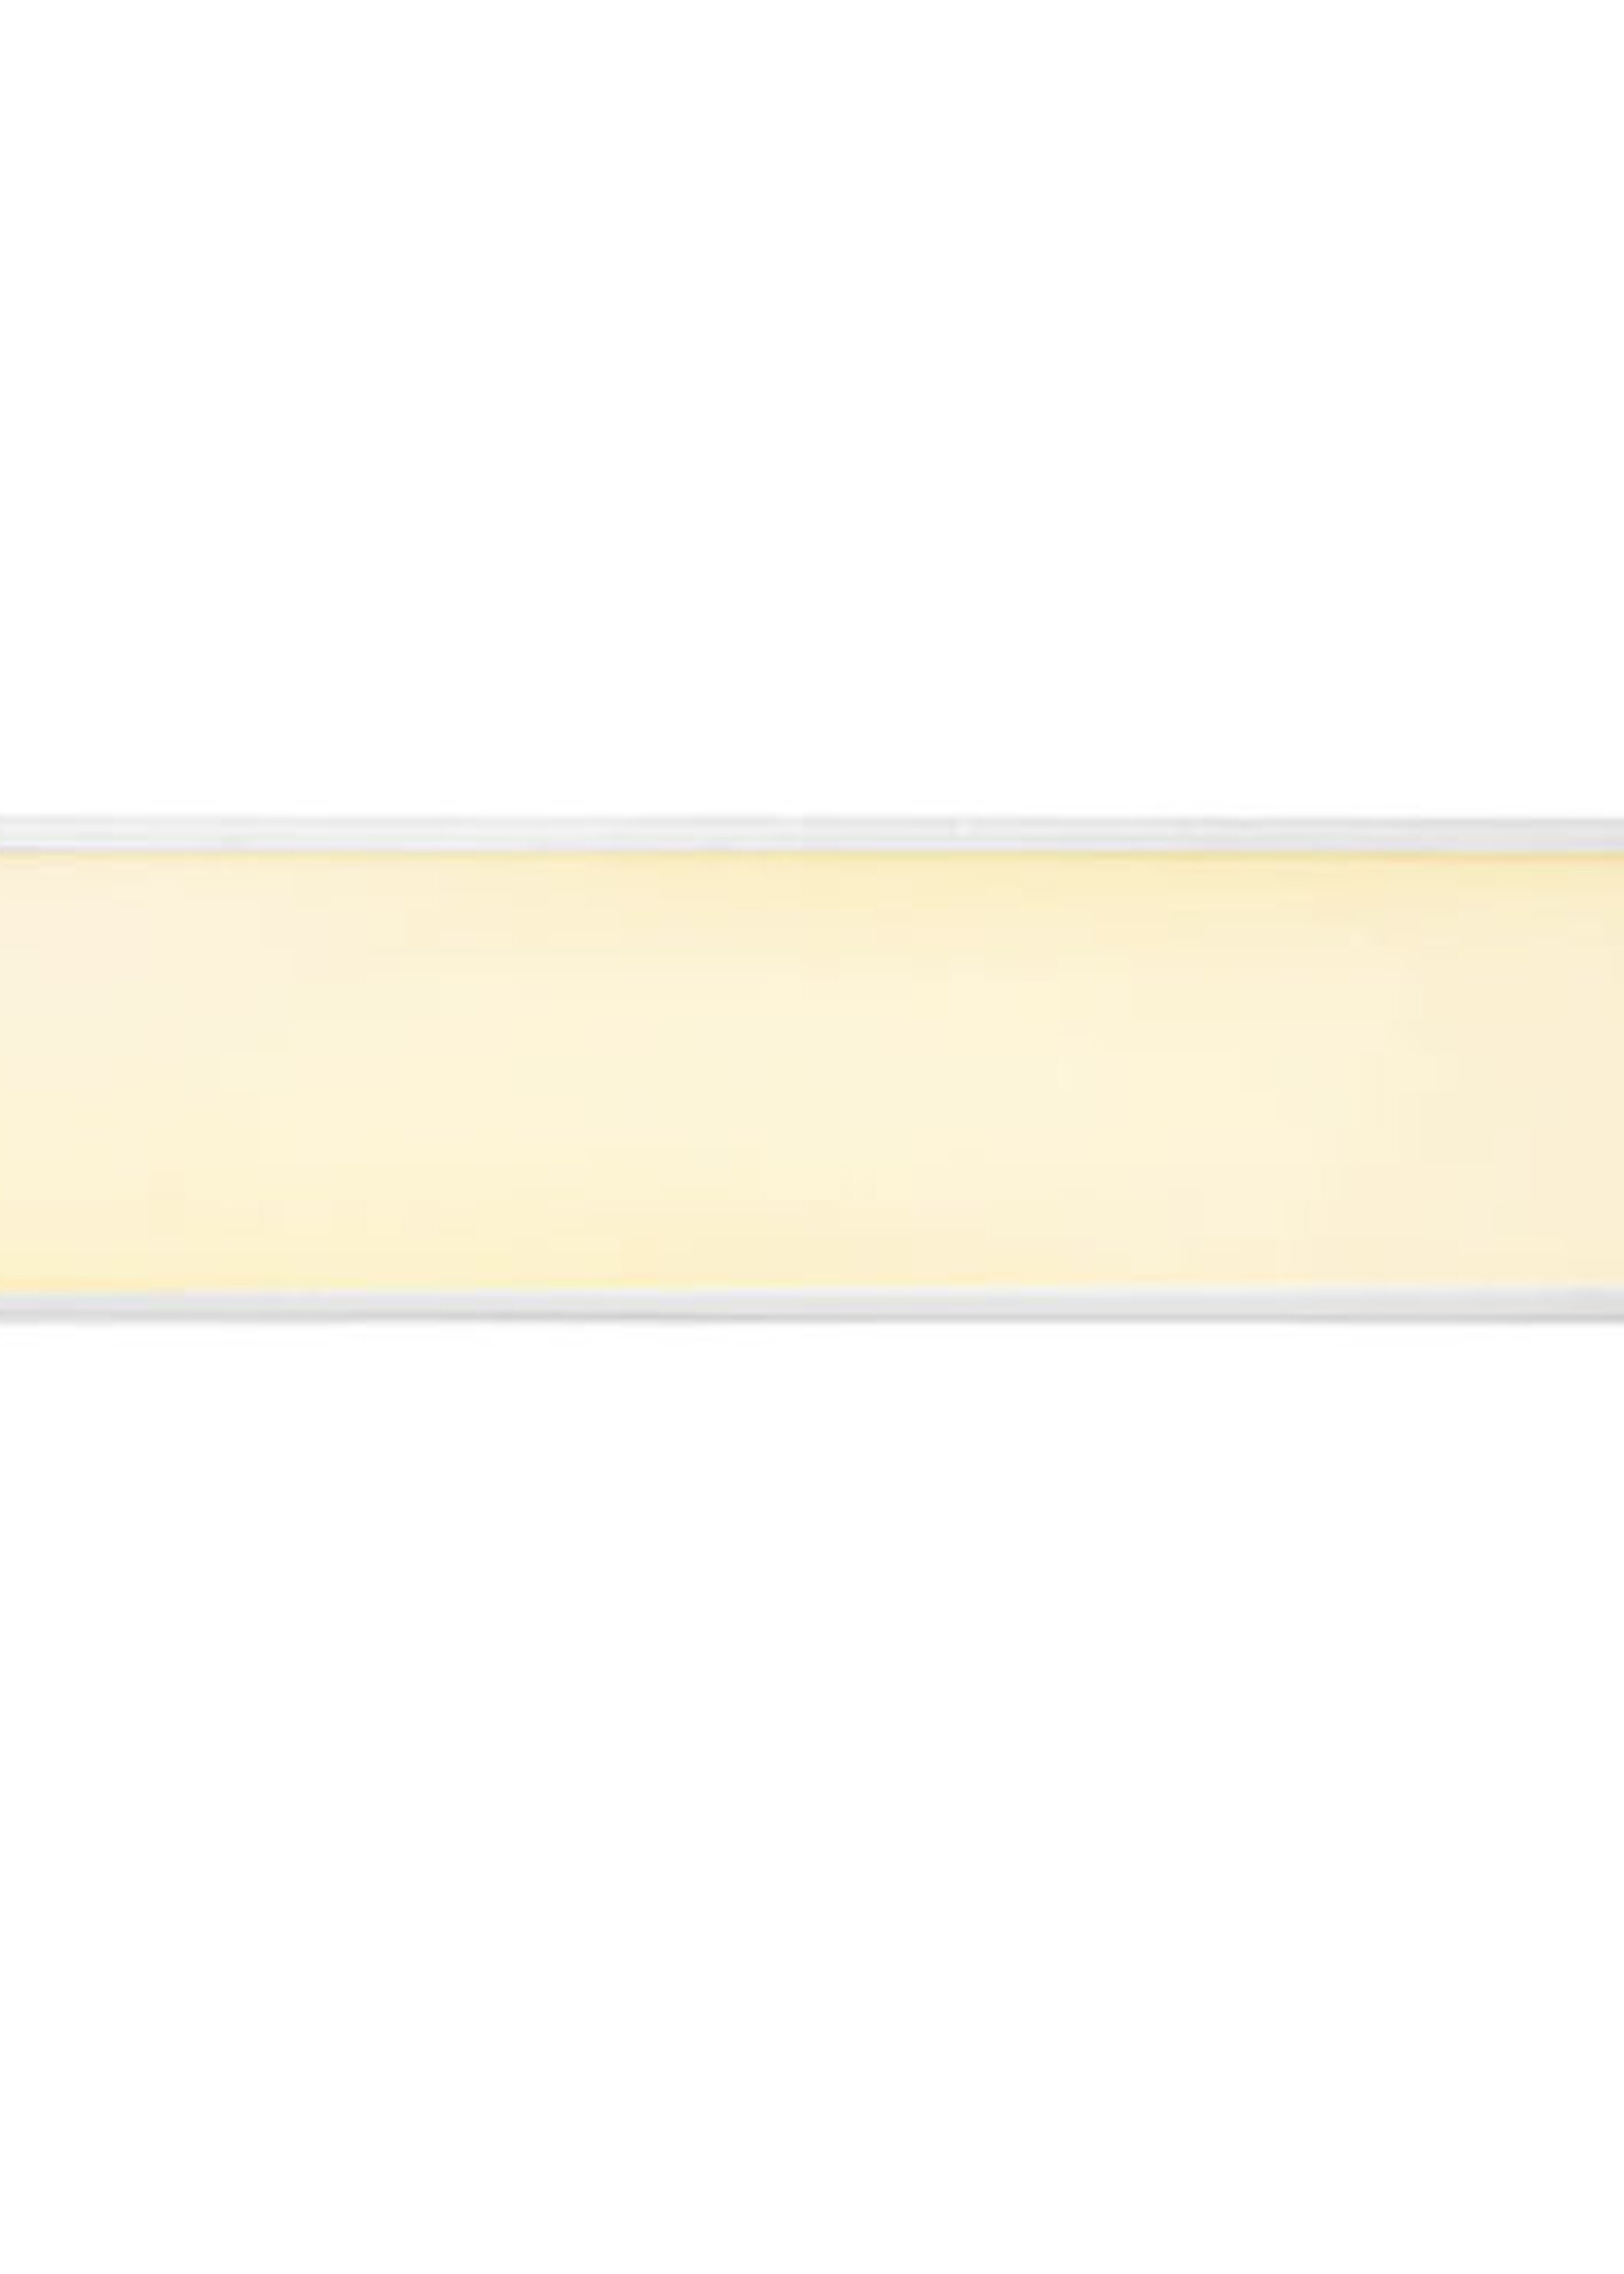 LEDWINKEL-Online LED Panel 30x120cm 36W 110lm/W Back-lit